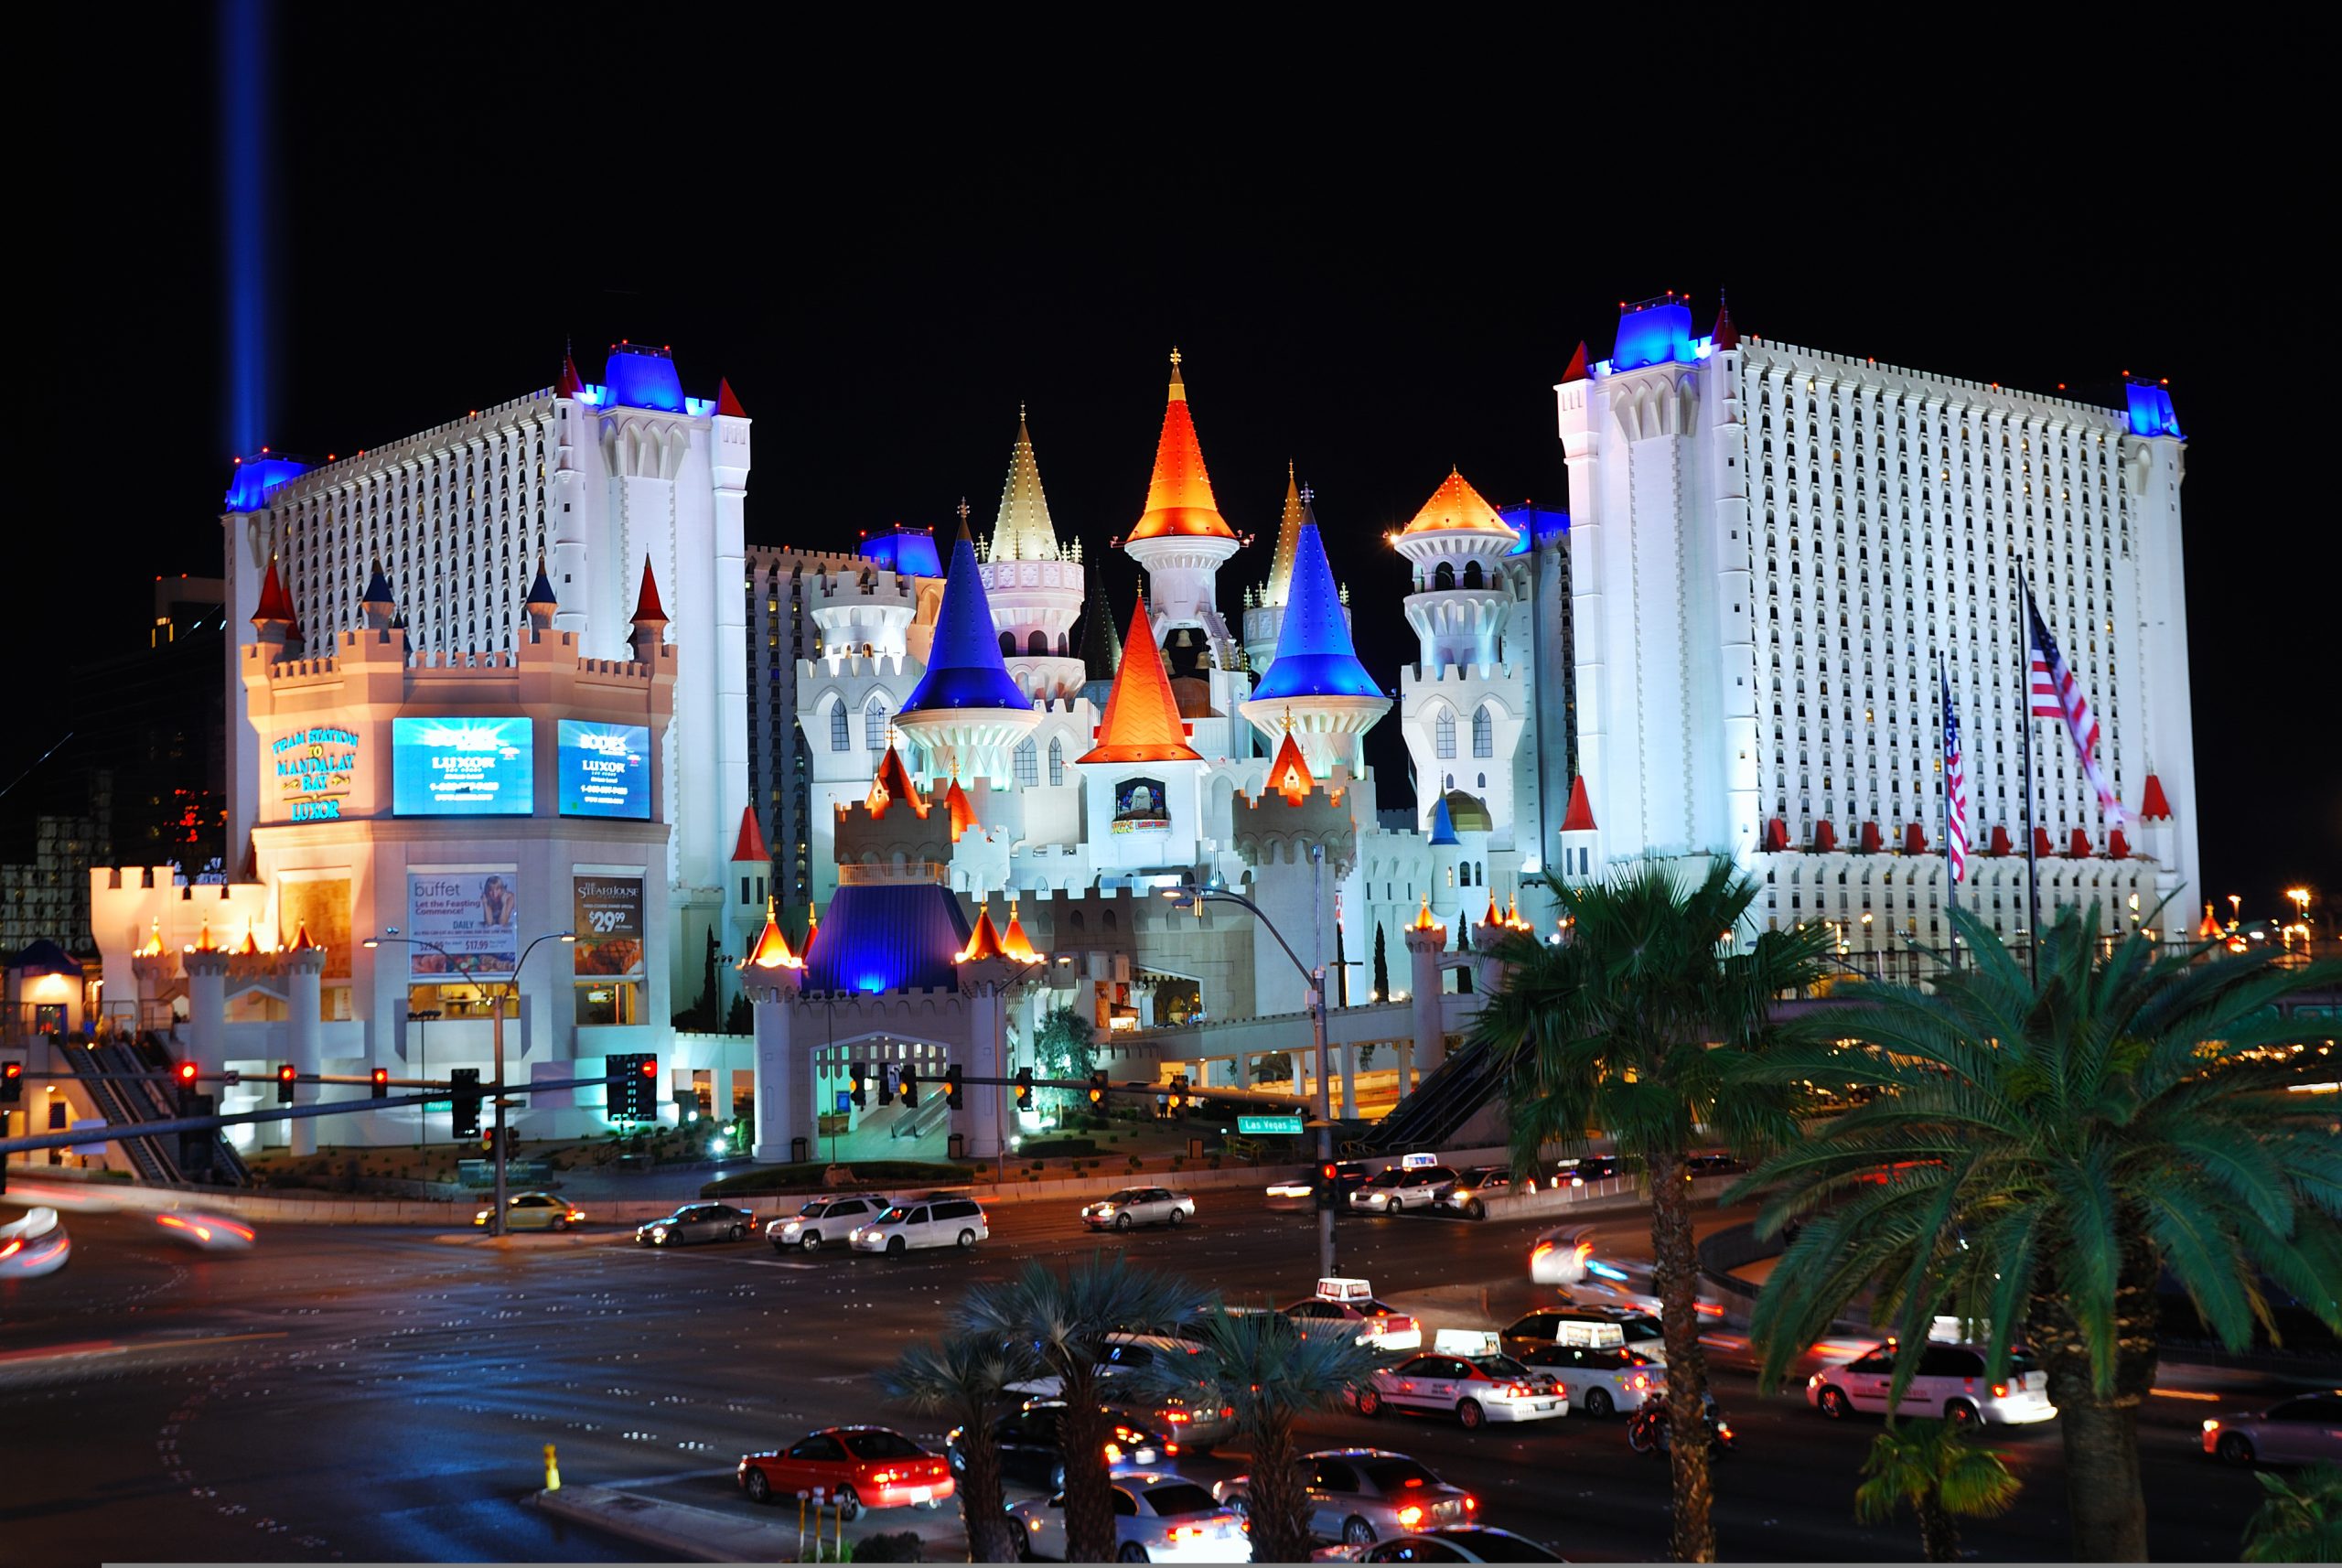 Las,Vegas,-,Mar,4:,Excalibur,Casino,And,Hotel,,Named